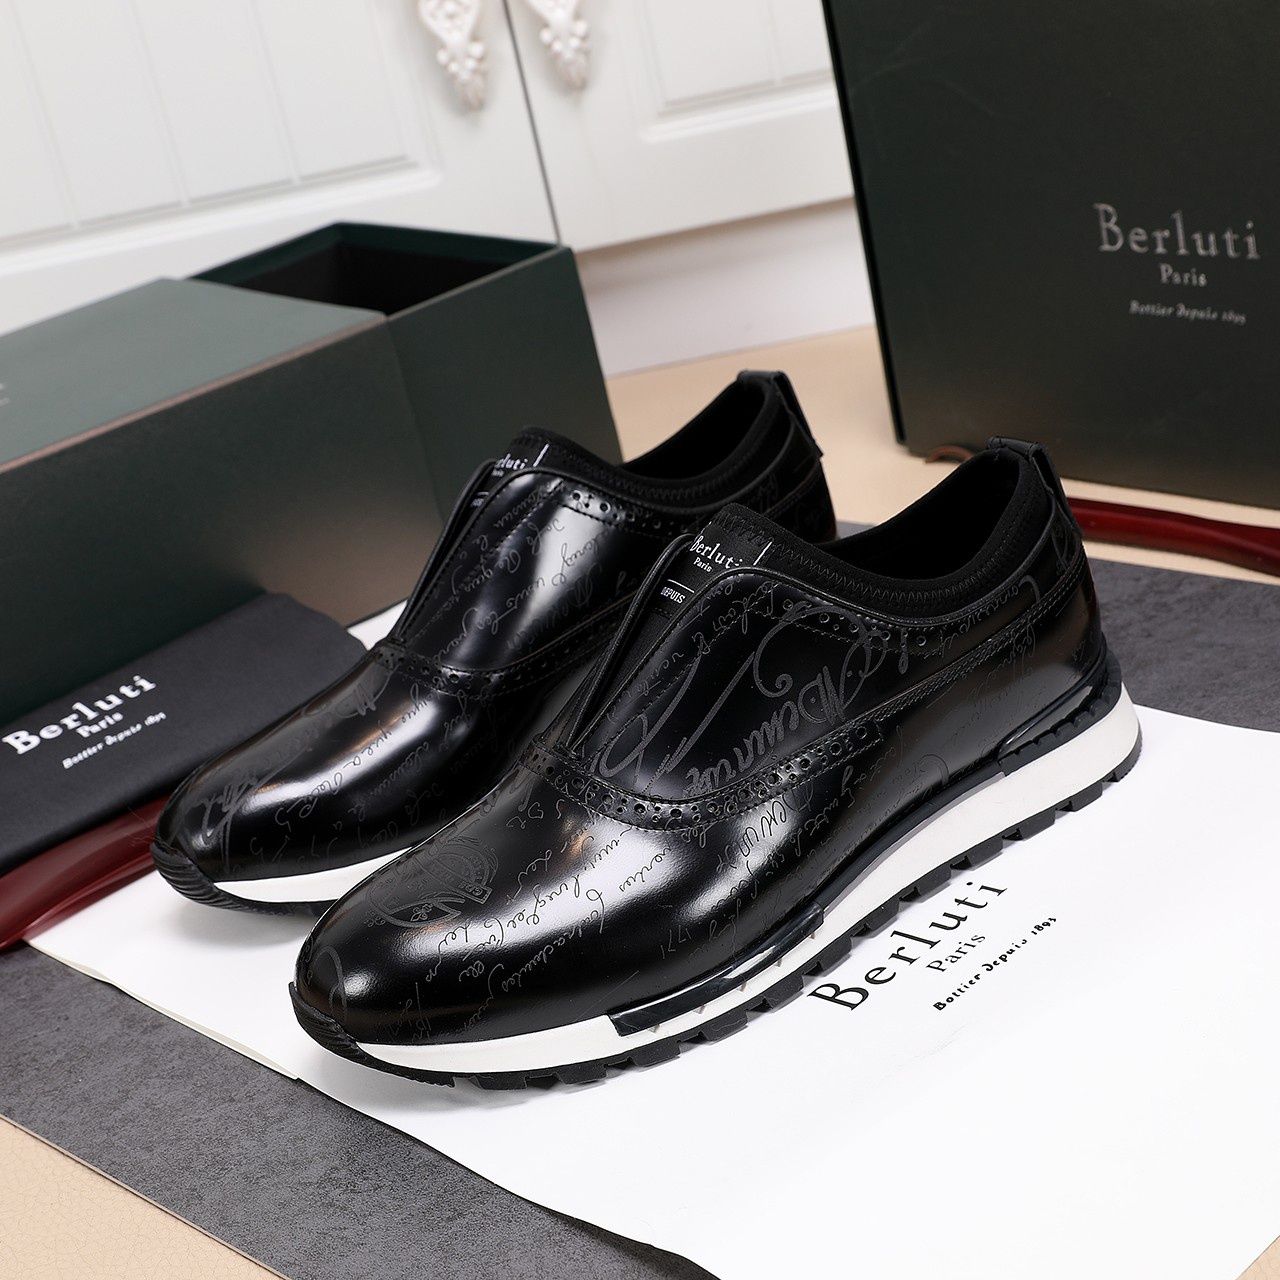 Brand New Berluti Mirage Black Venezia Leather handmade dress shoes